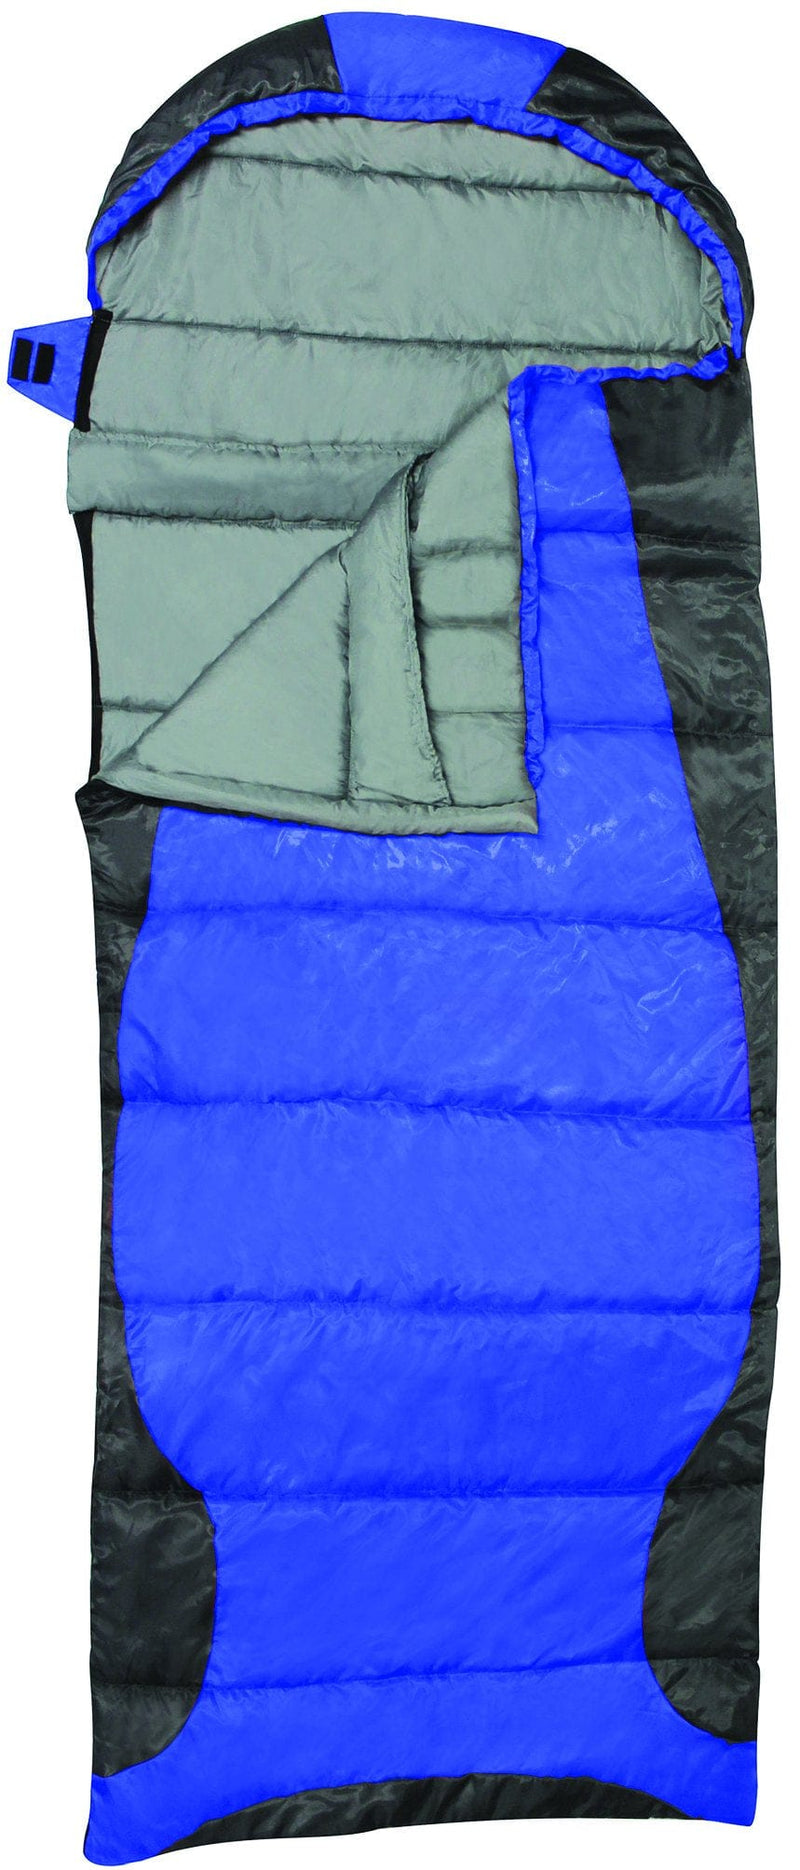 Sleeping bag heat zone RT225 -10C 14F 78+15x34 inch 198+38x87cm rockwater design